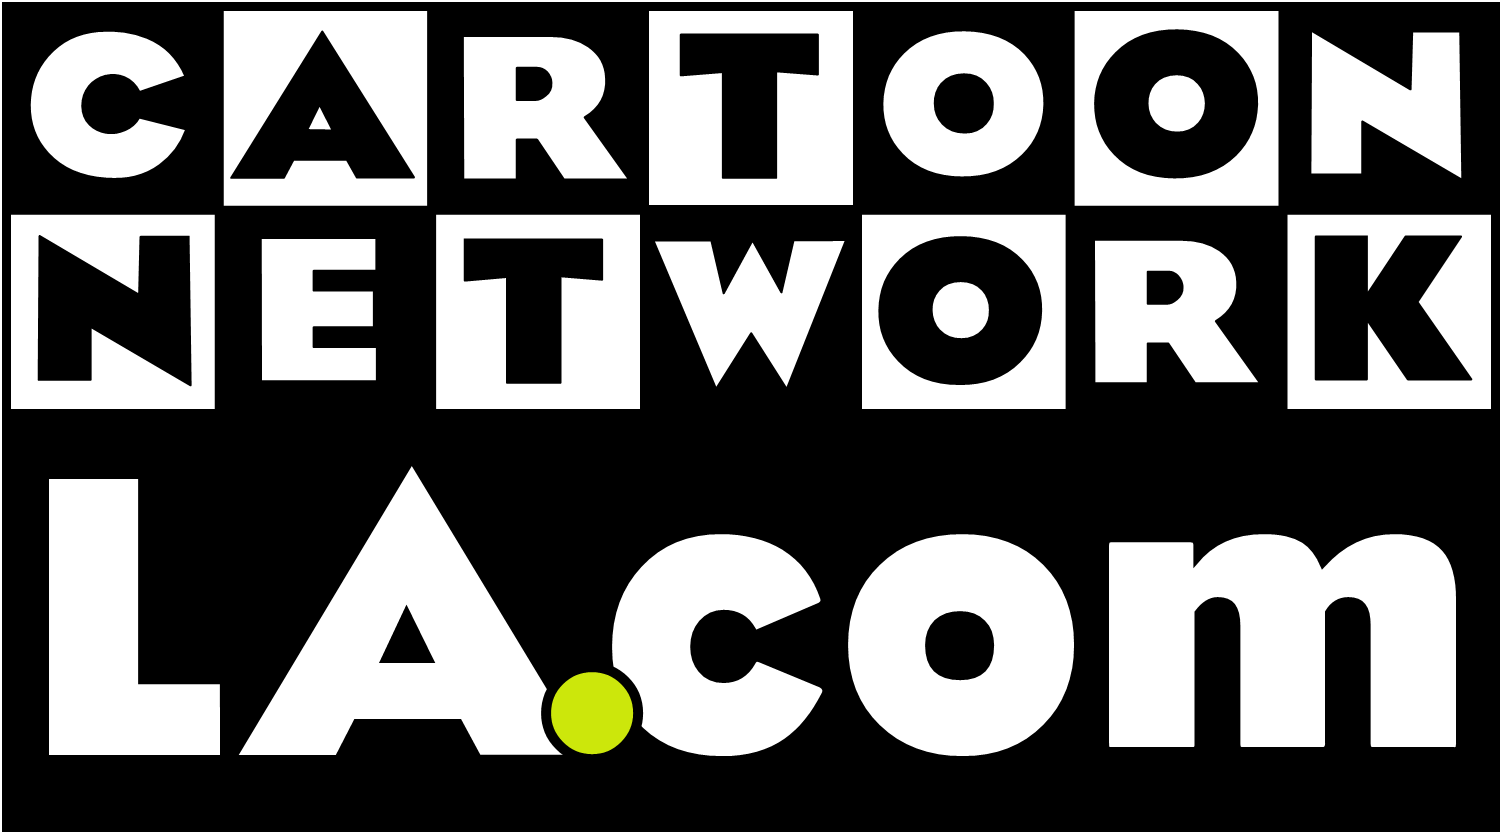 Cartoonnetwork.com Logo - Cartoon Network (Latin America) | Logopedia | FANDOM powered by Wikia